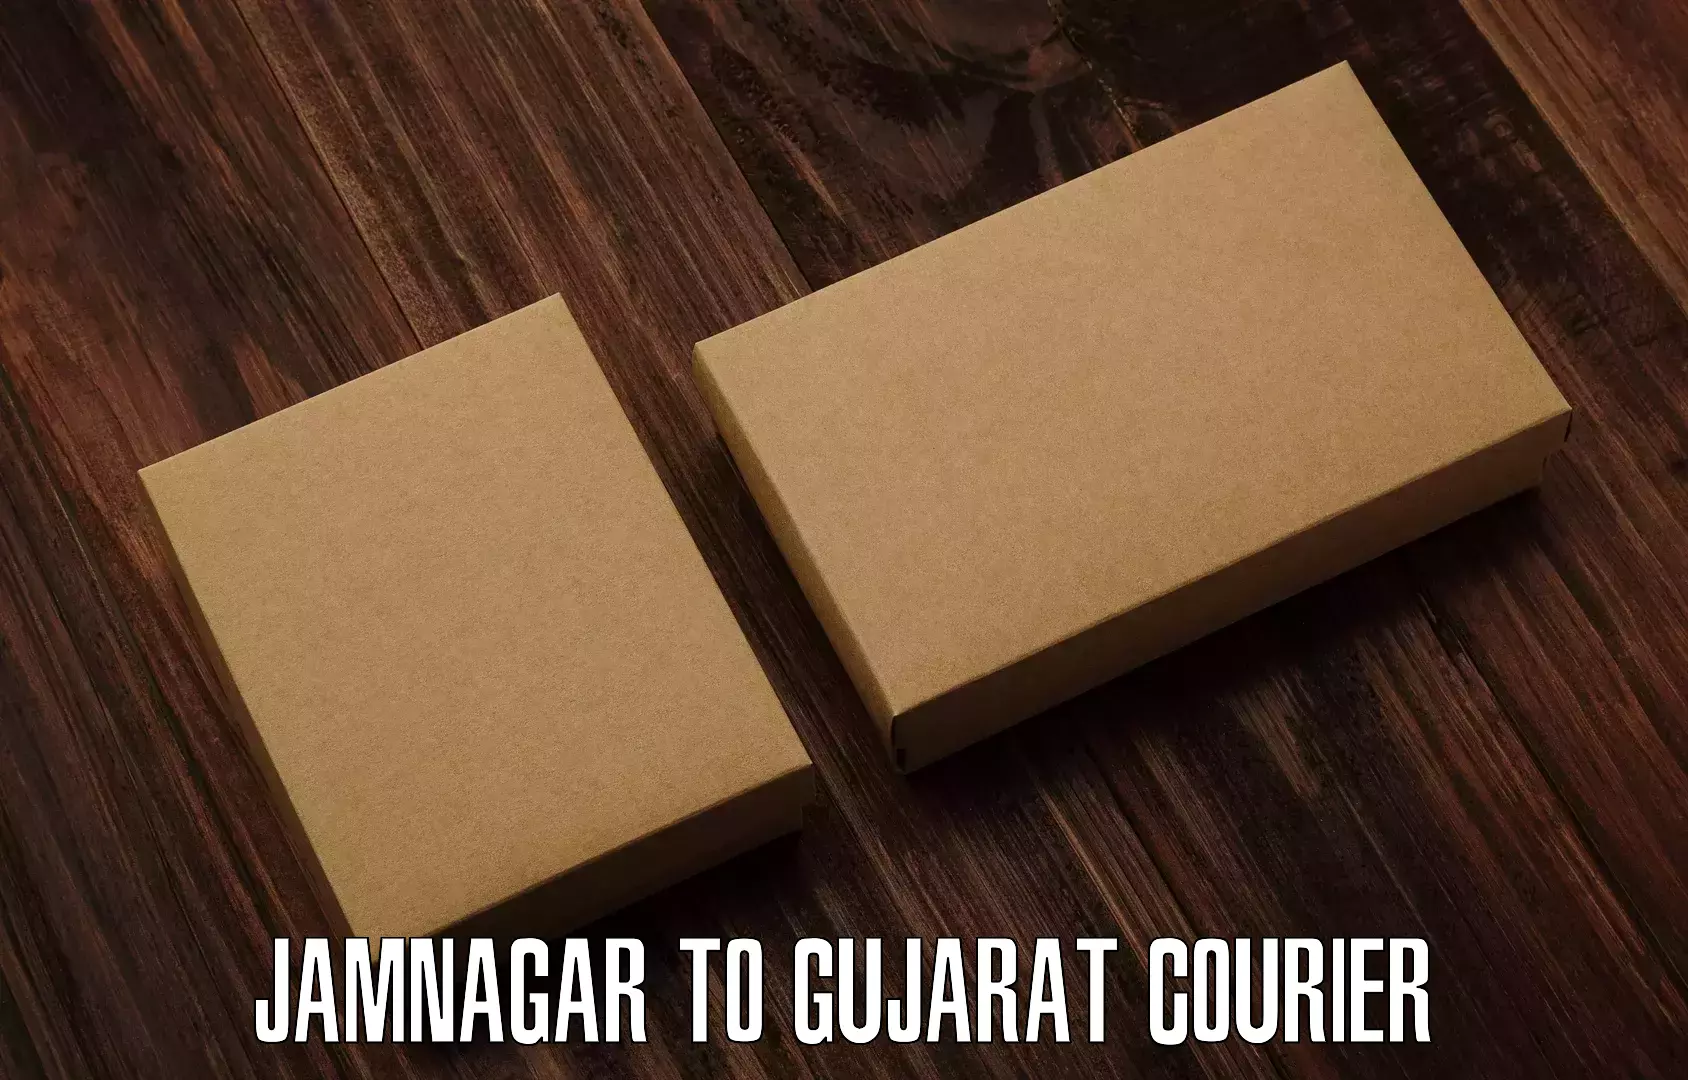 Efficient order fulfillment in Jamnagar to Palitana